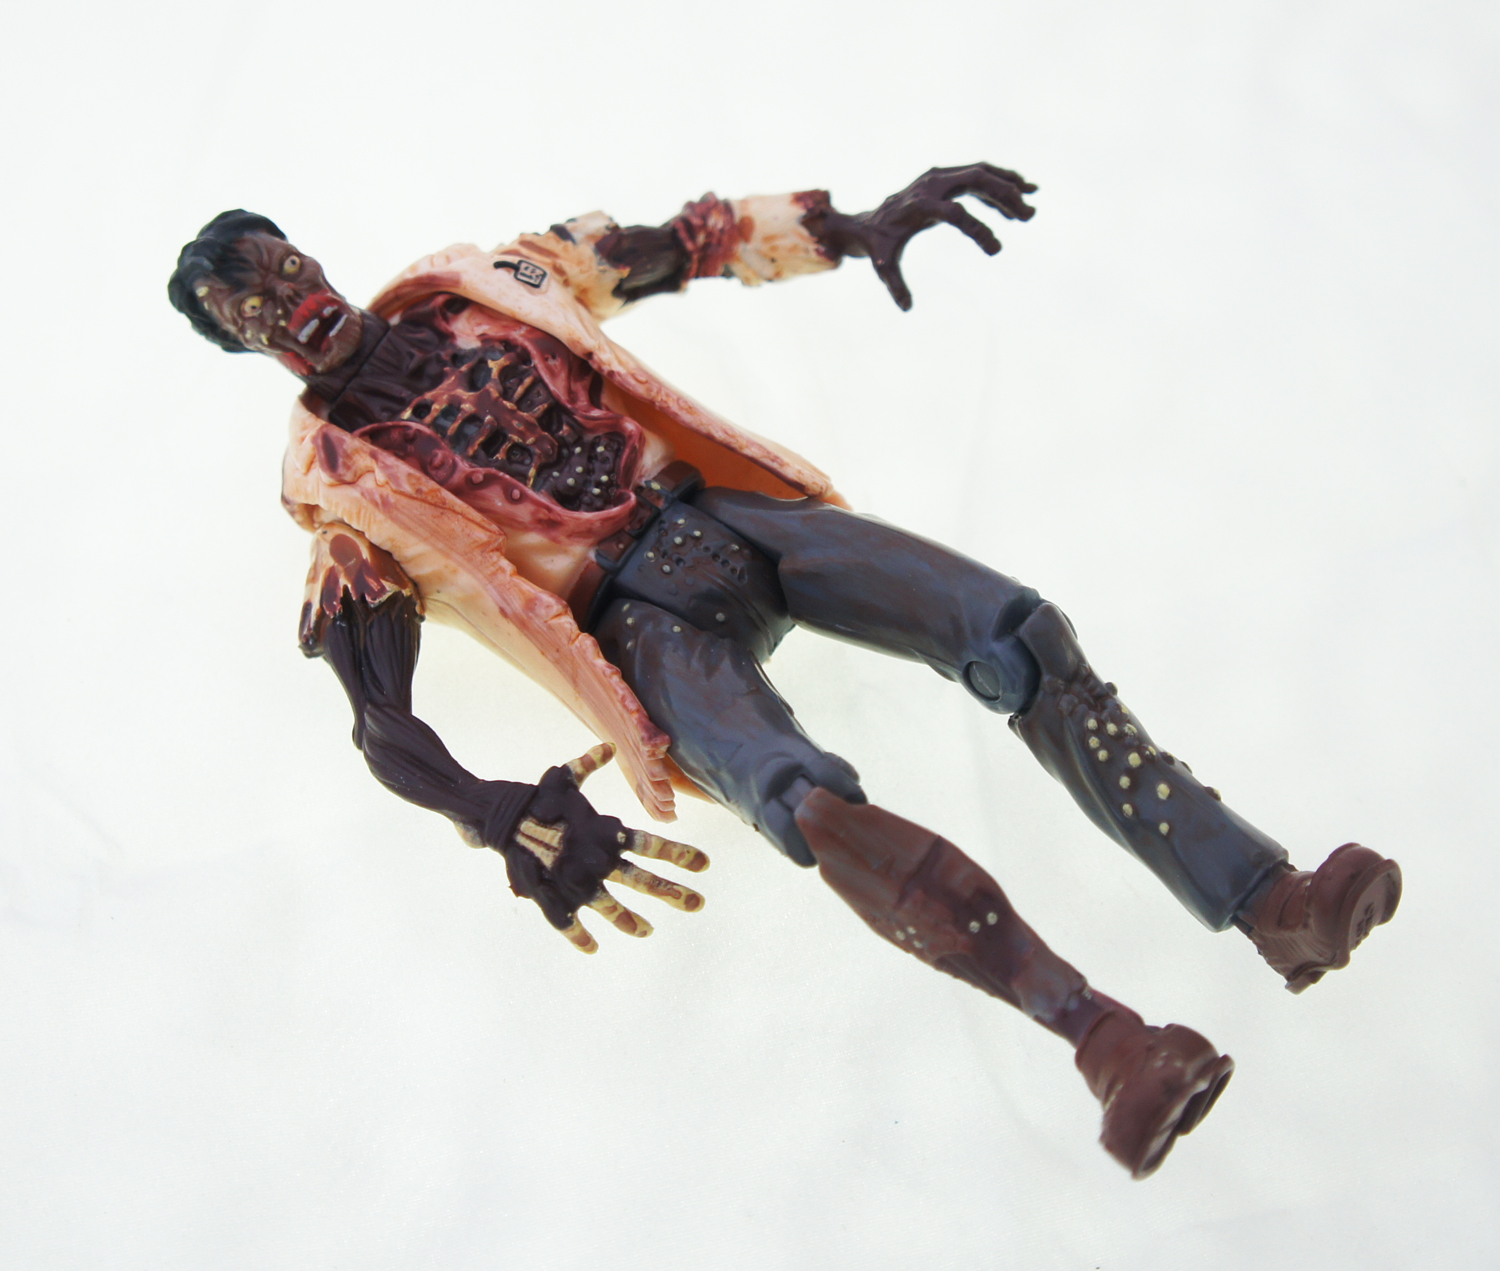 Resident Evil Action Figures Toy Biz 1998 - Leftover Culture Review